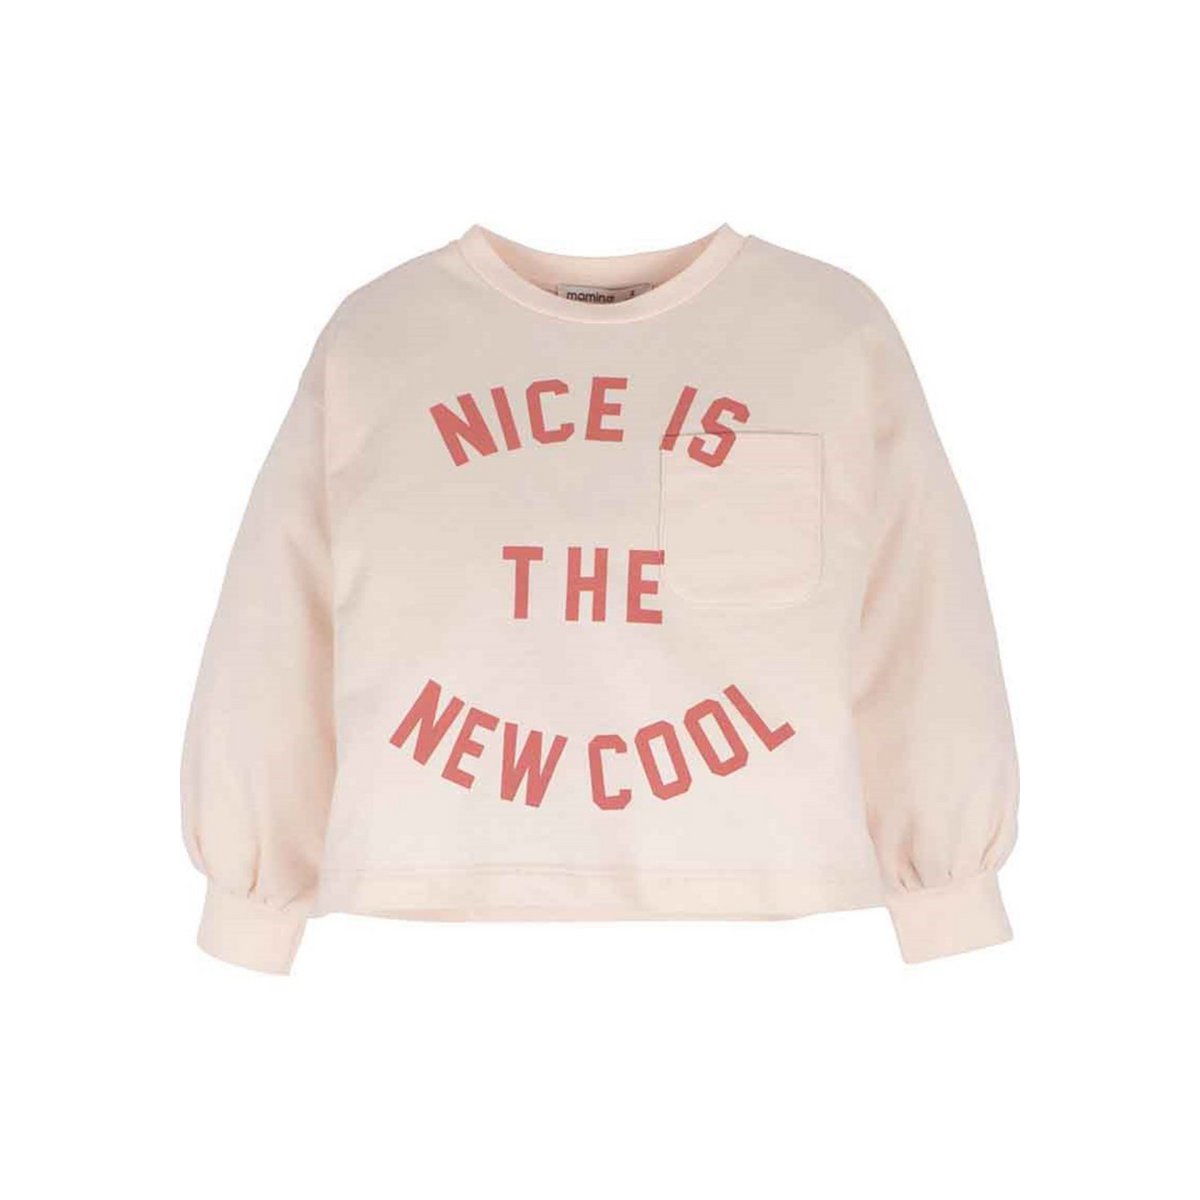 Sweatshirt - Nice is the new cool